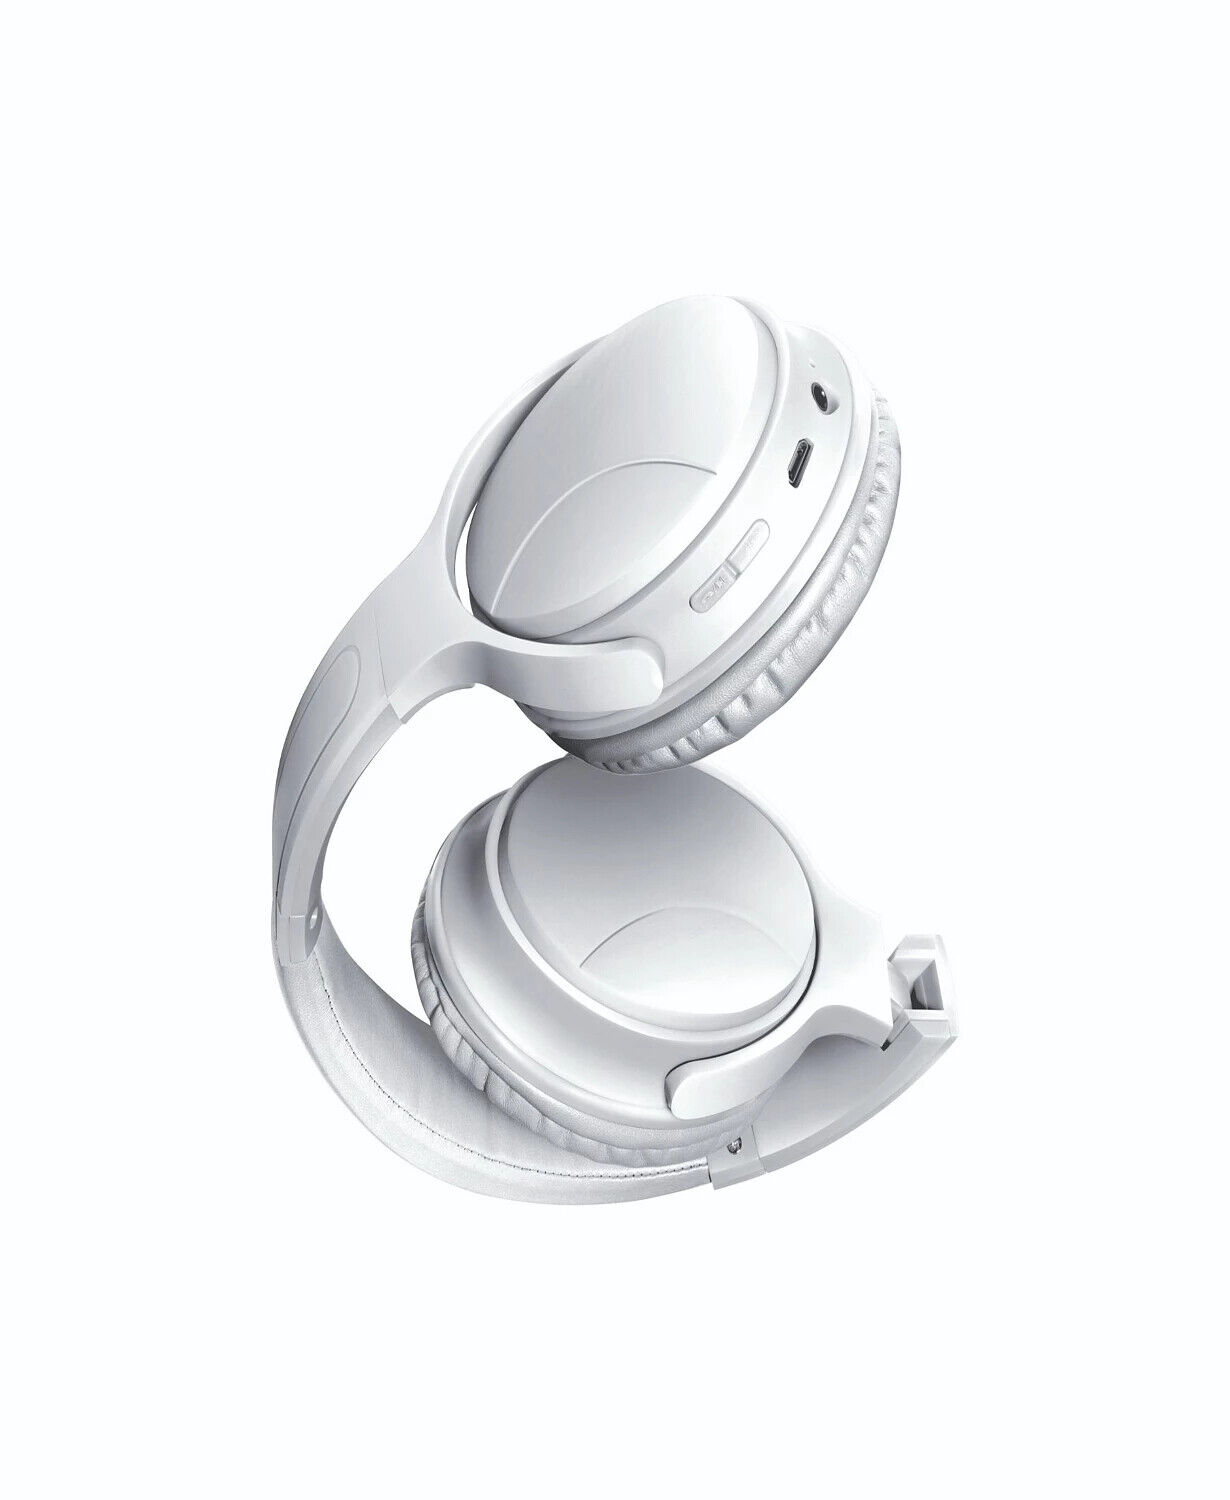 BROOKSTONE Wireless Headphones Bluetooth Rechargeable Studio HD White $80 - NIB